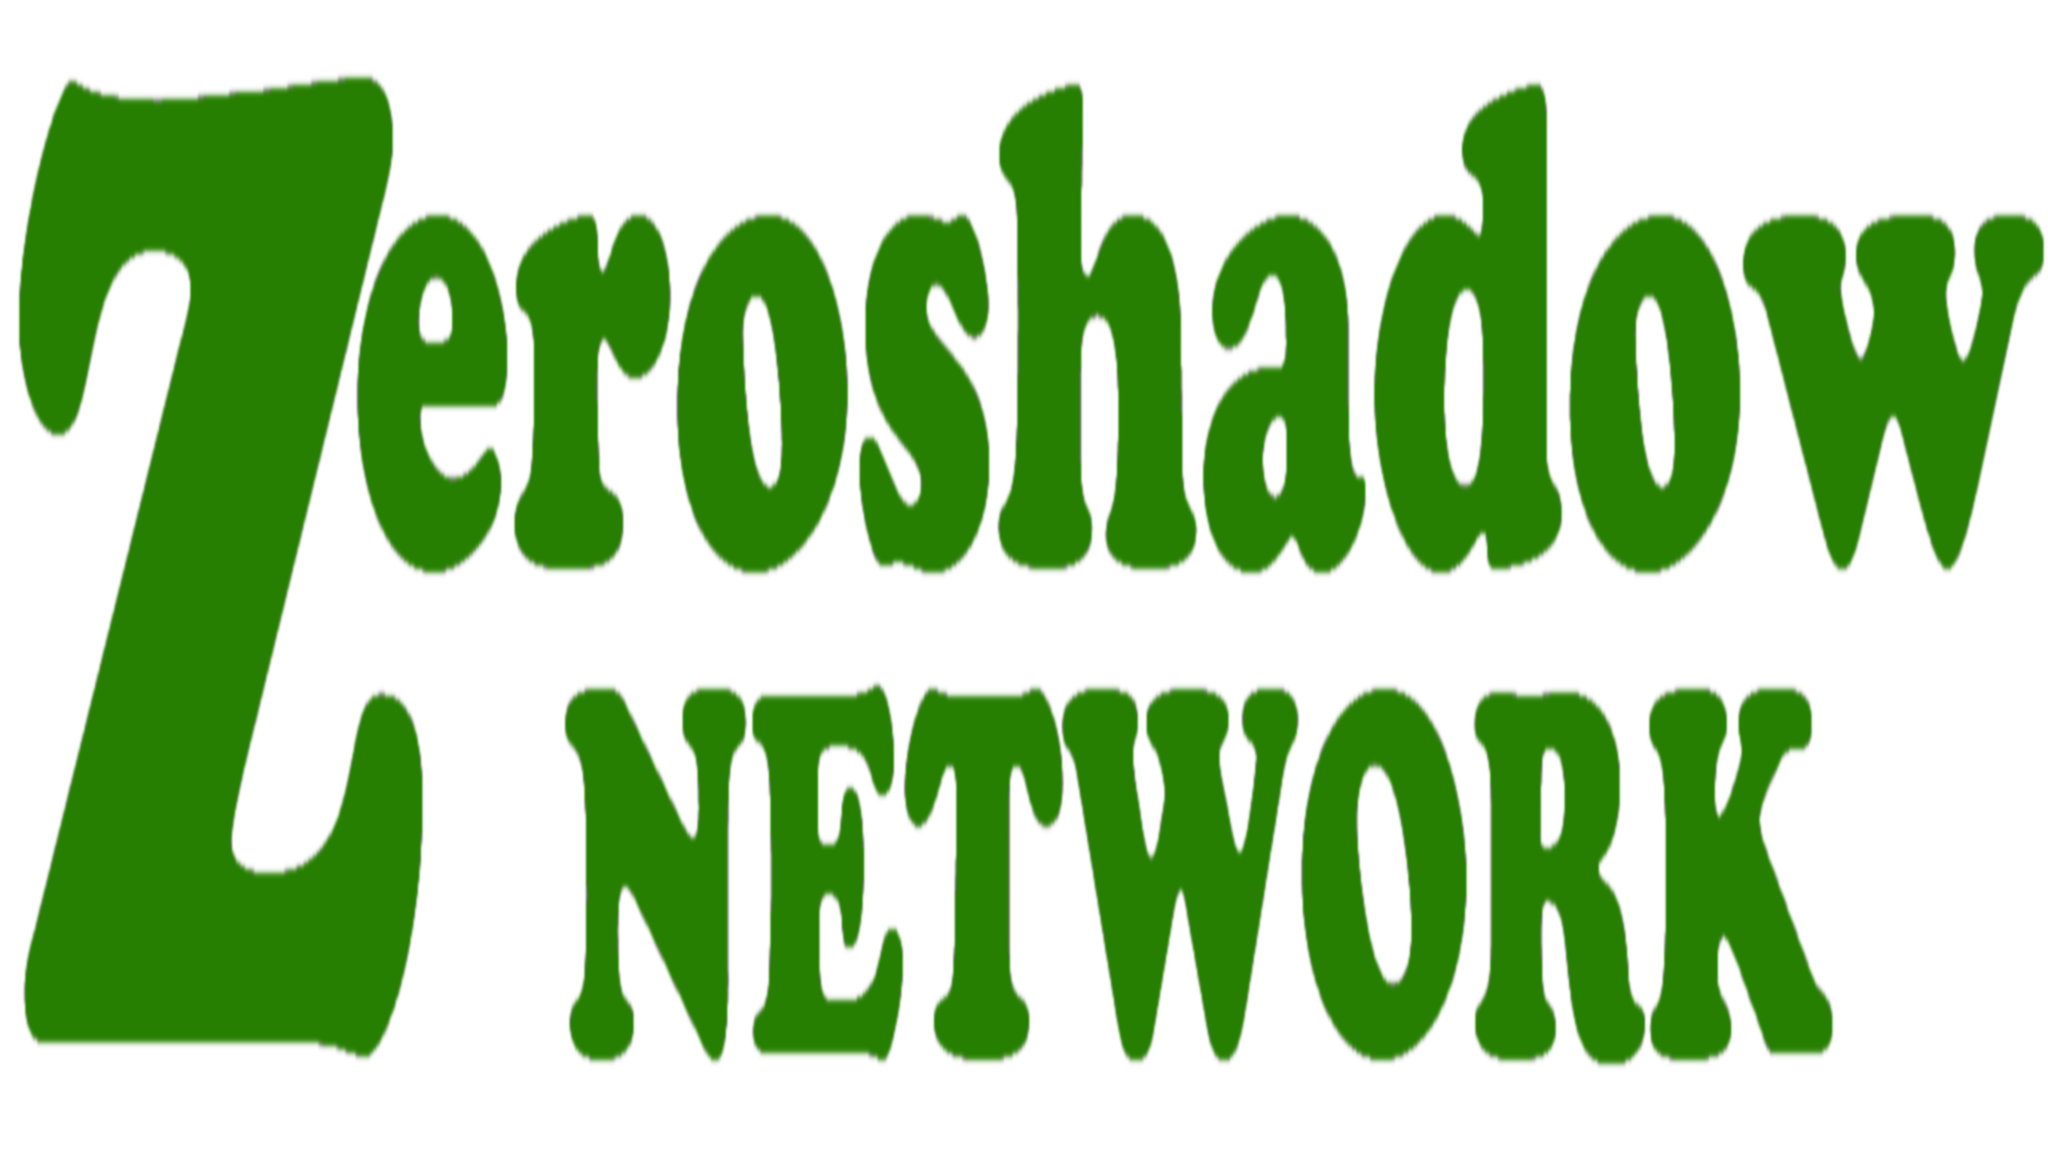 Zeroshadow Network